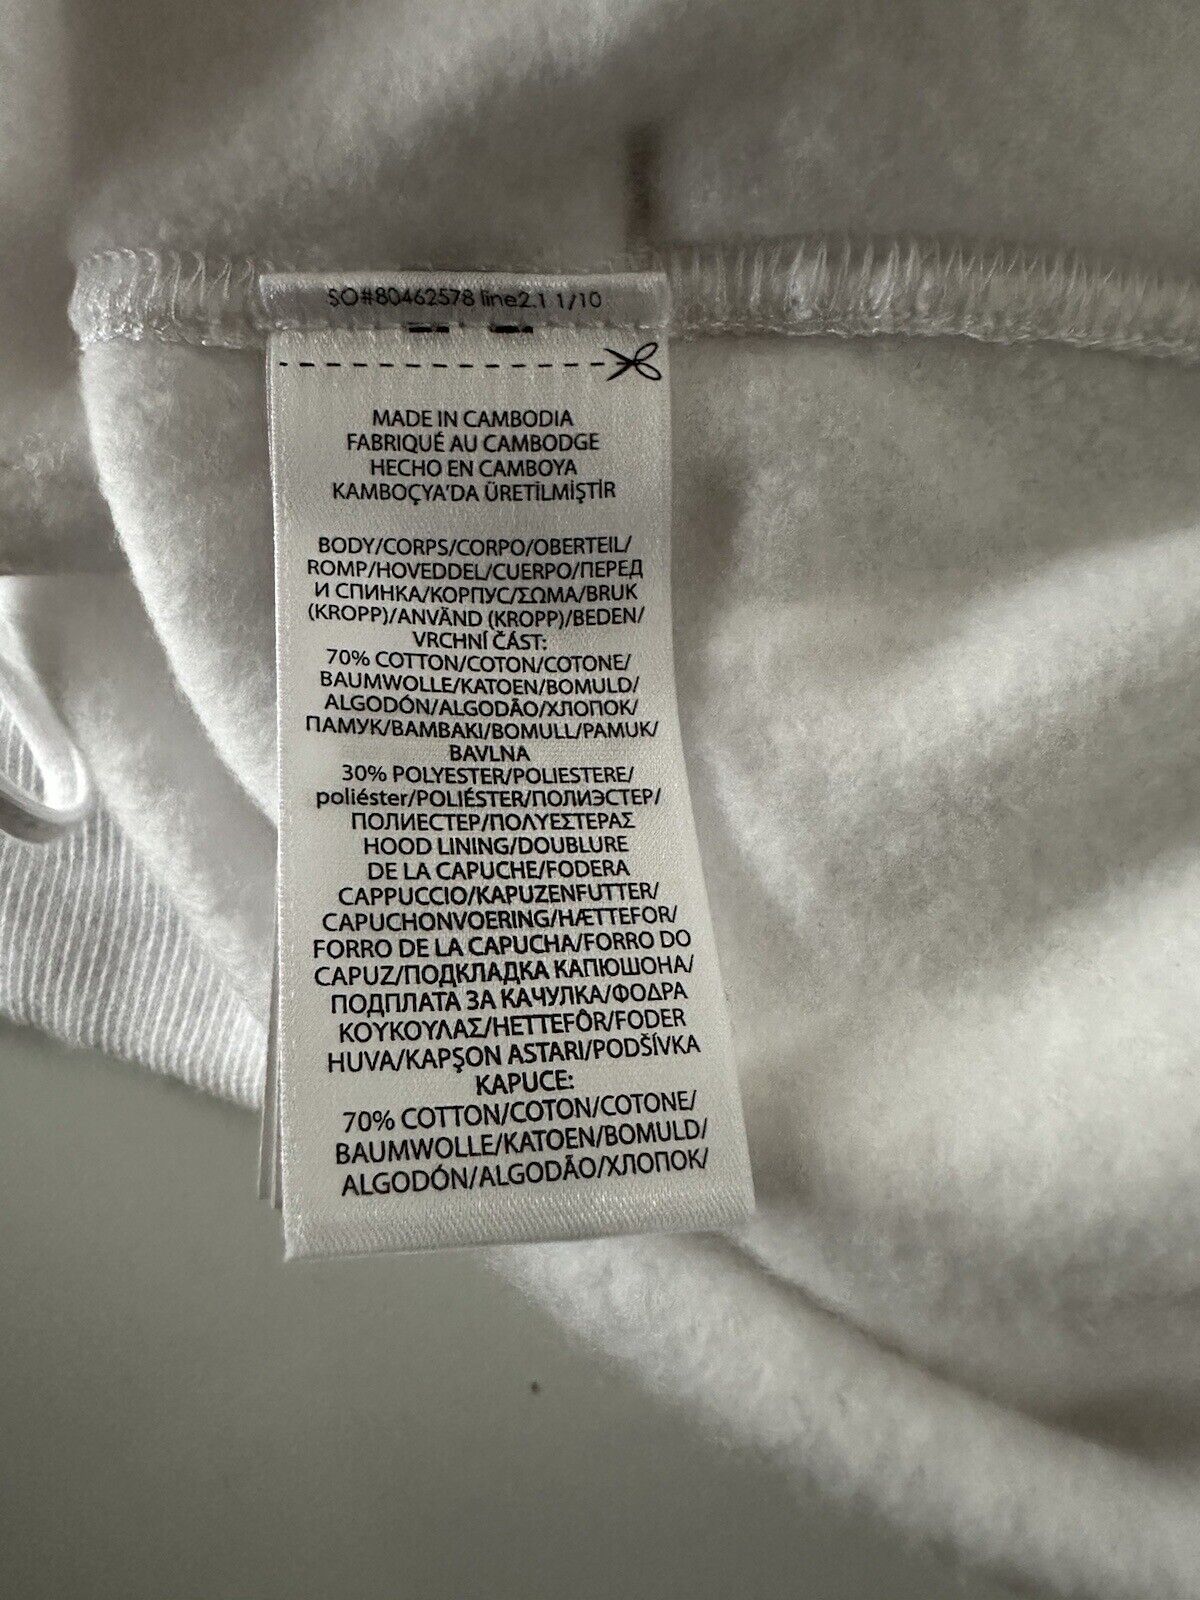 NWT $188 Polo Ralph Lauren Long Sleeve Bear Sweatshirt with Hoodie White 1XB/1TG